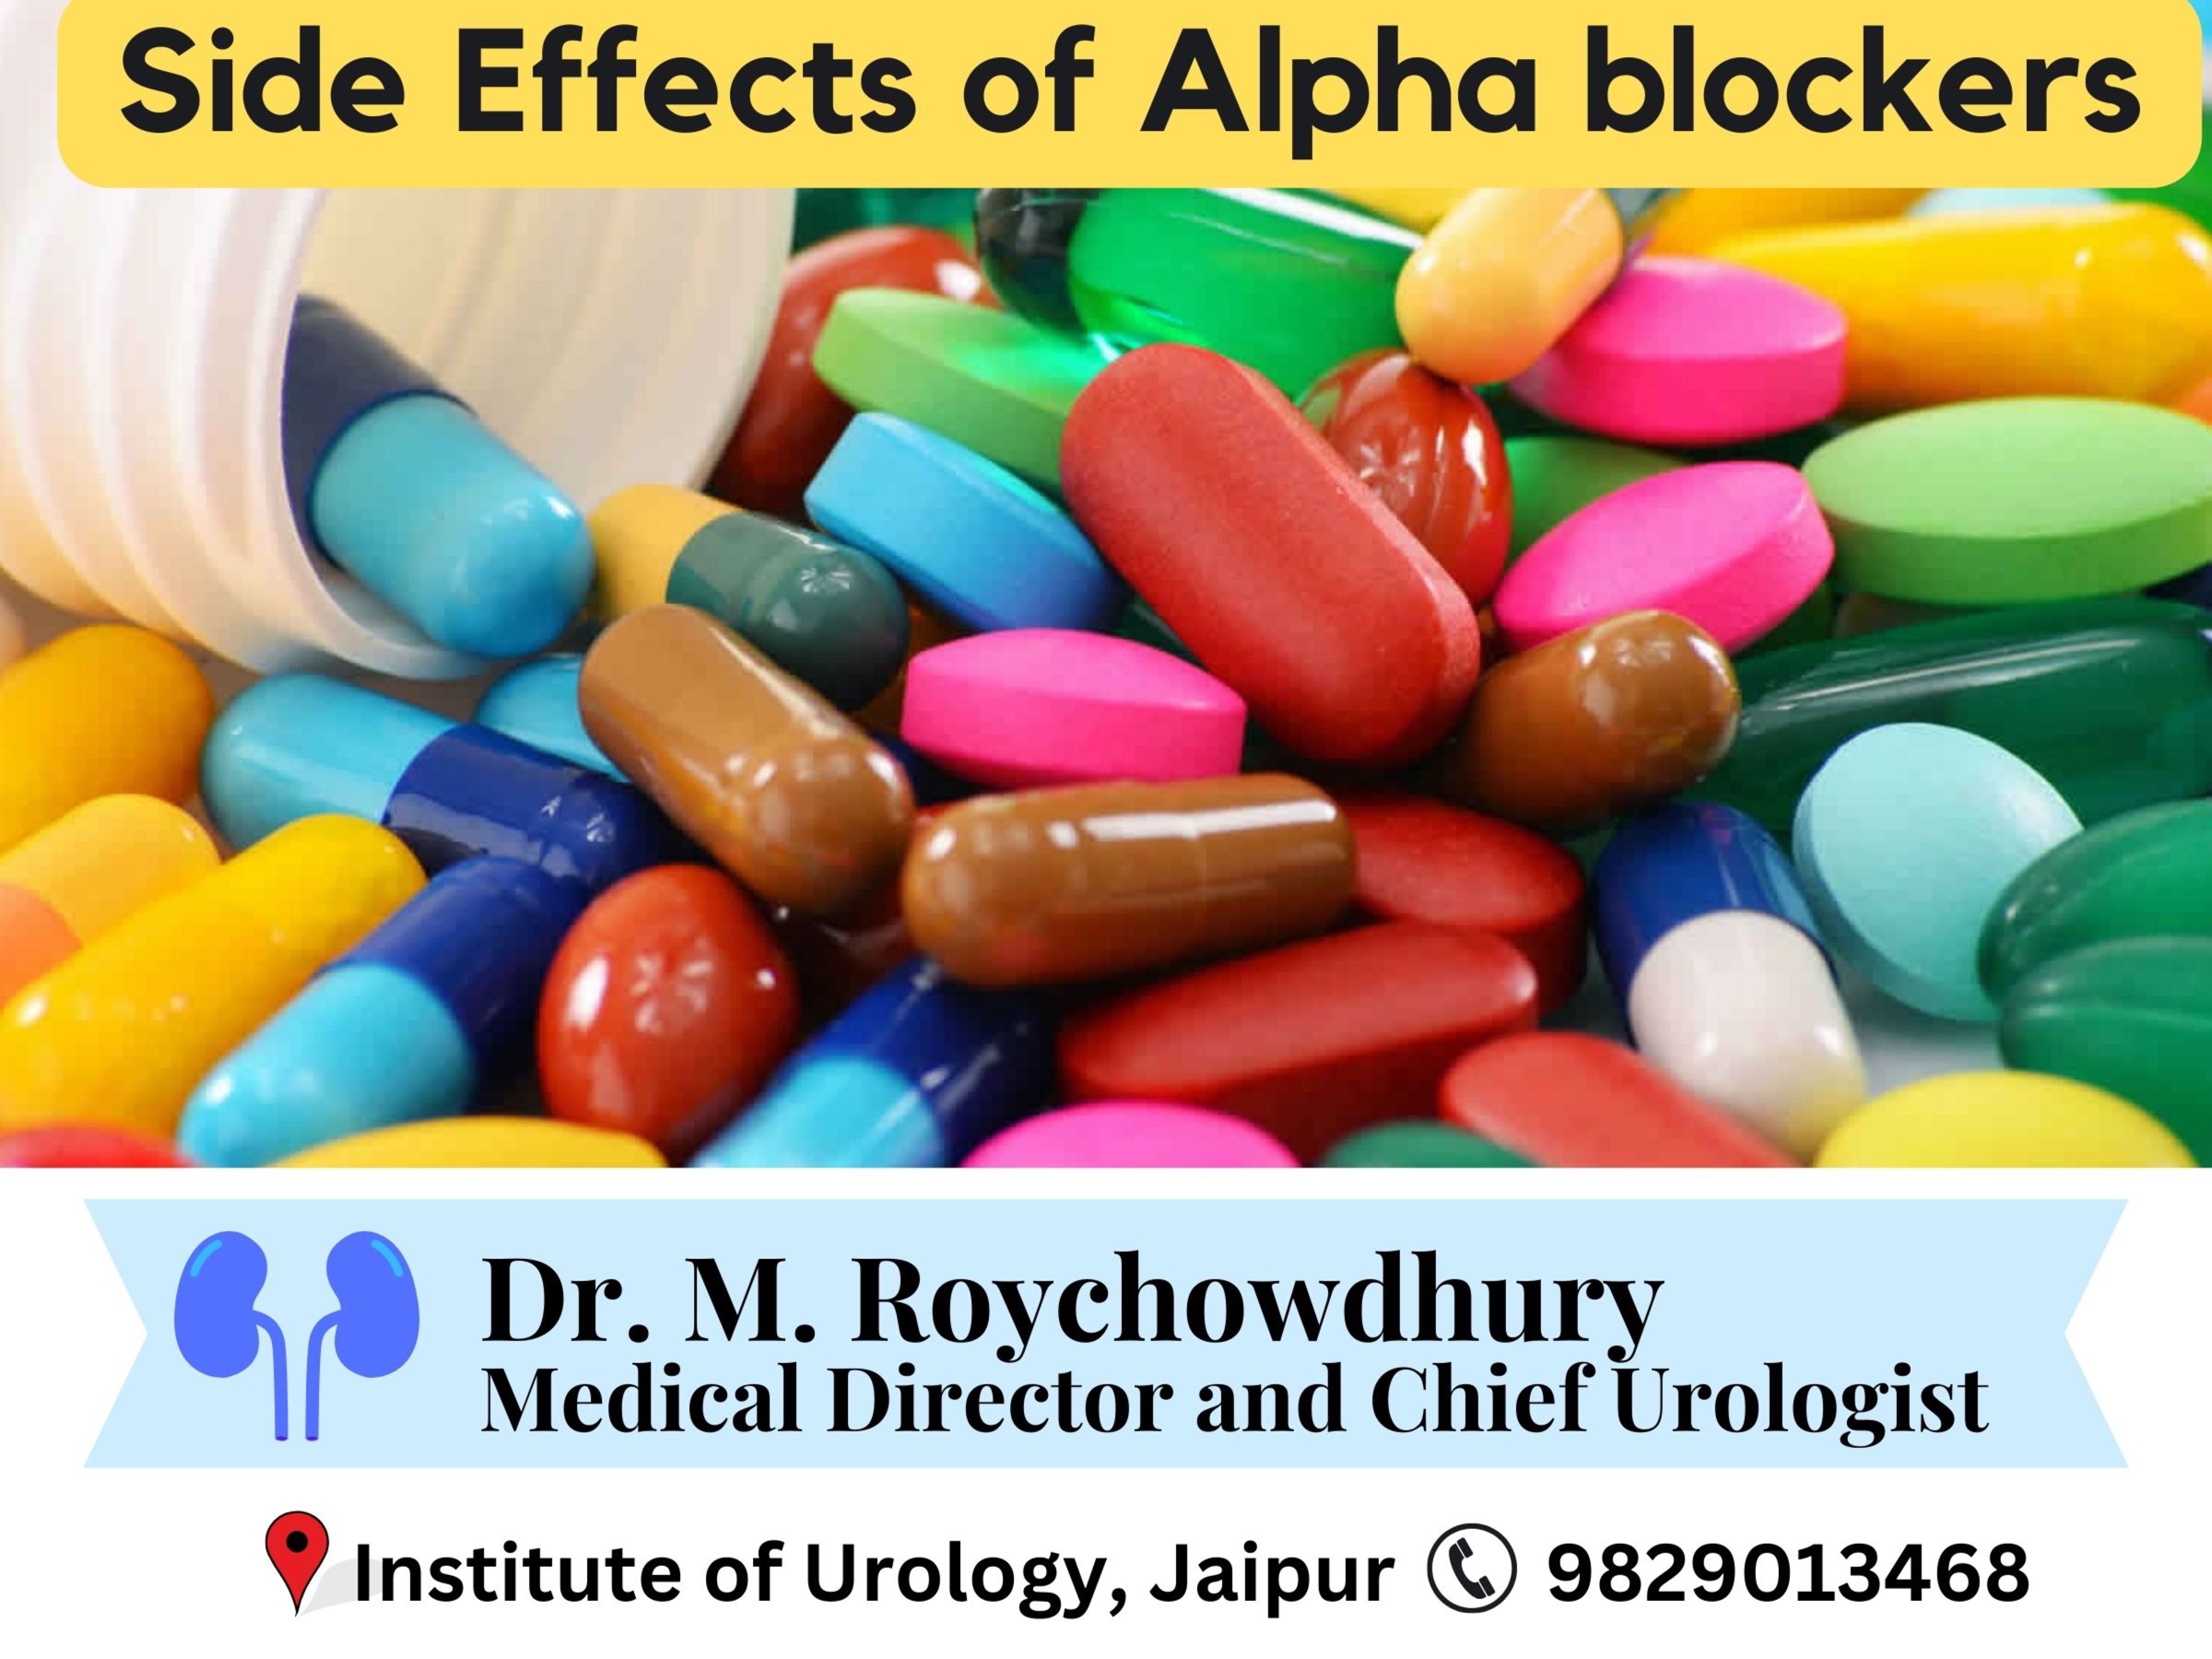 Side Effects of Alpha Blockers- Understanding Risks and Benefits in Urological Practice